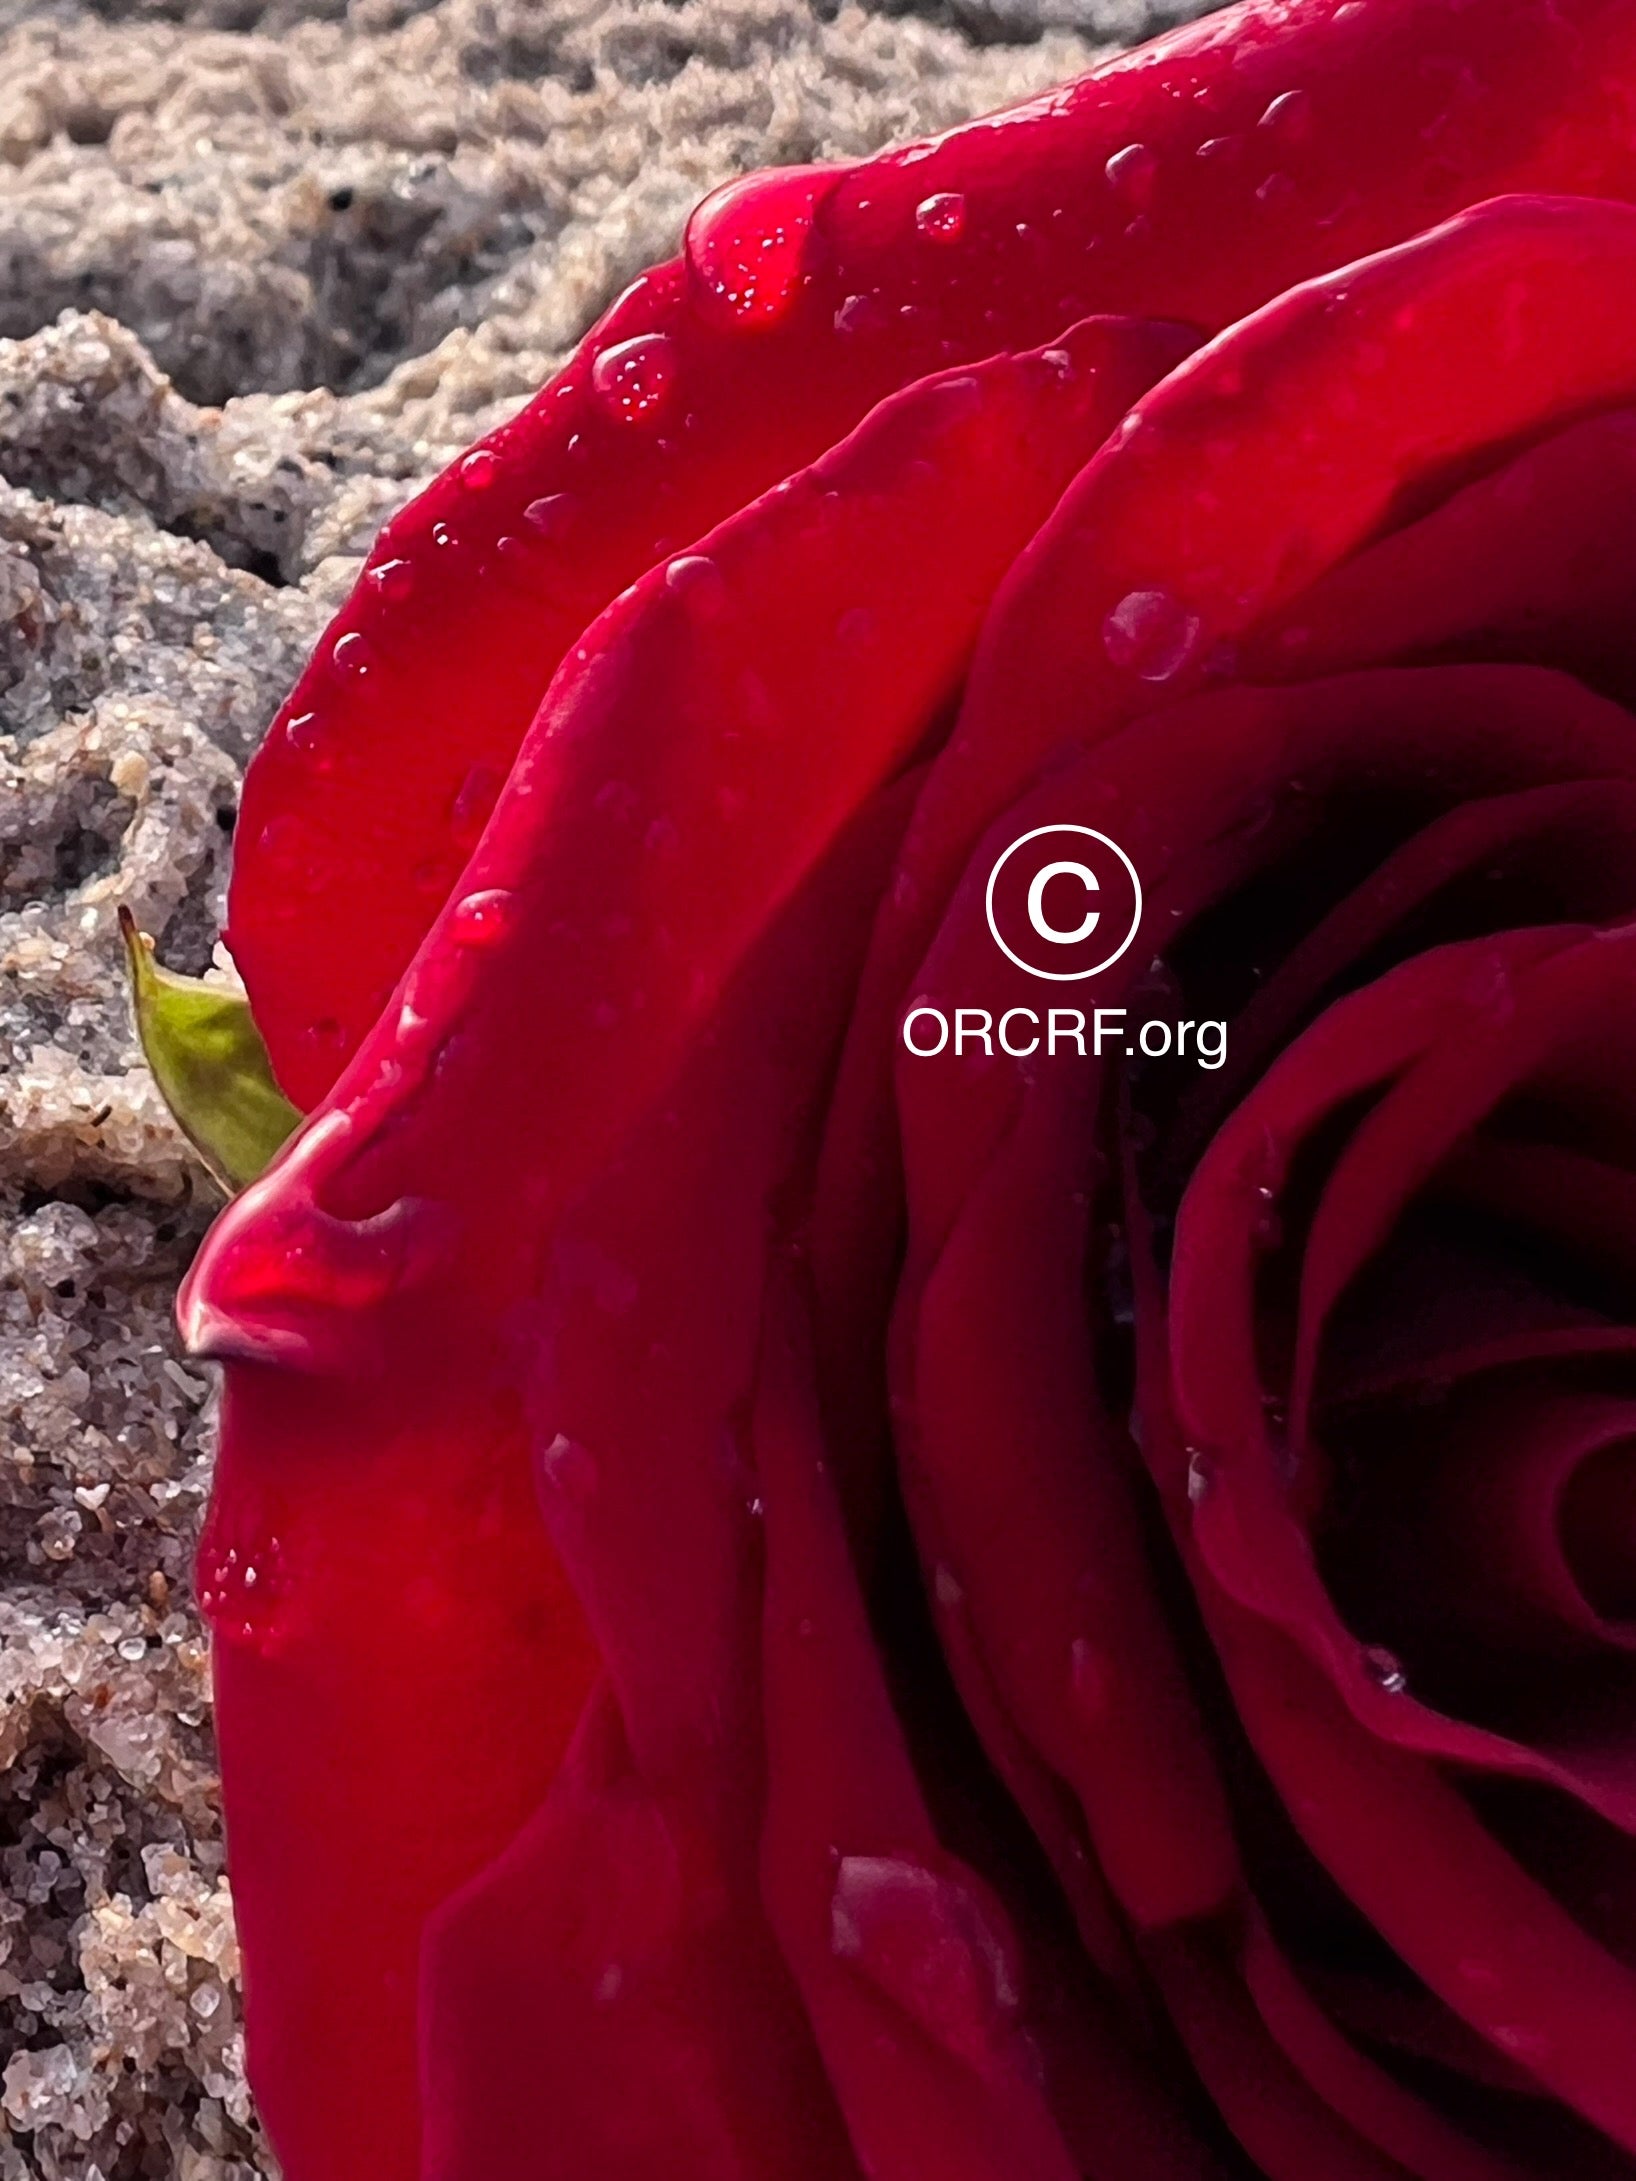 ORCRF ROSE / NFT Digital Art Image 4633 - Image Award Winning Photography by JARVIS Creative & Media Studios